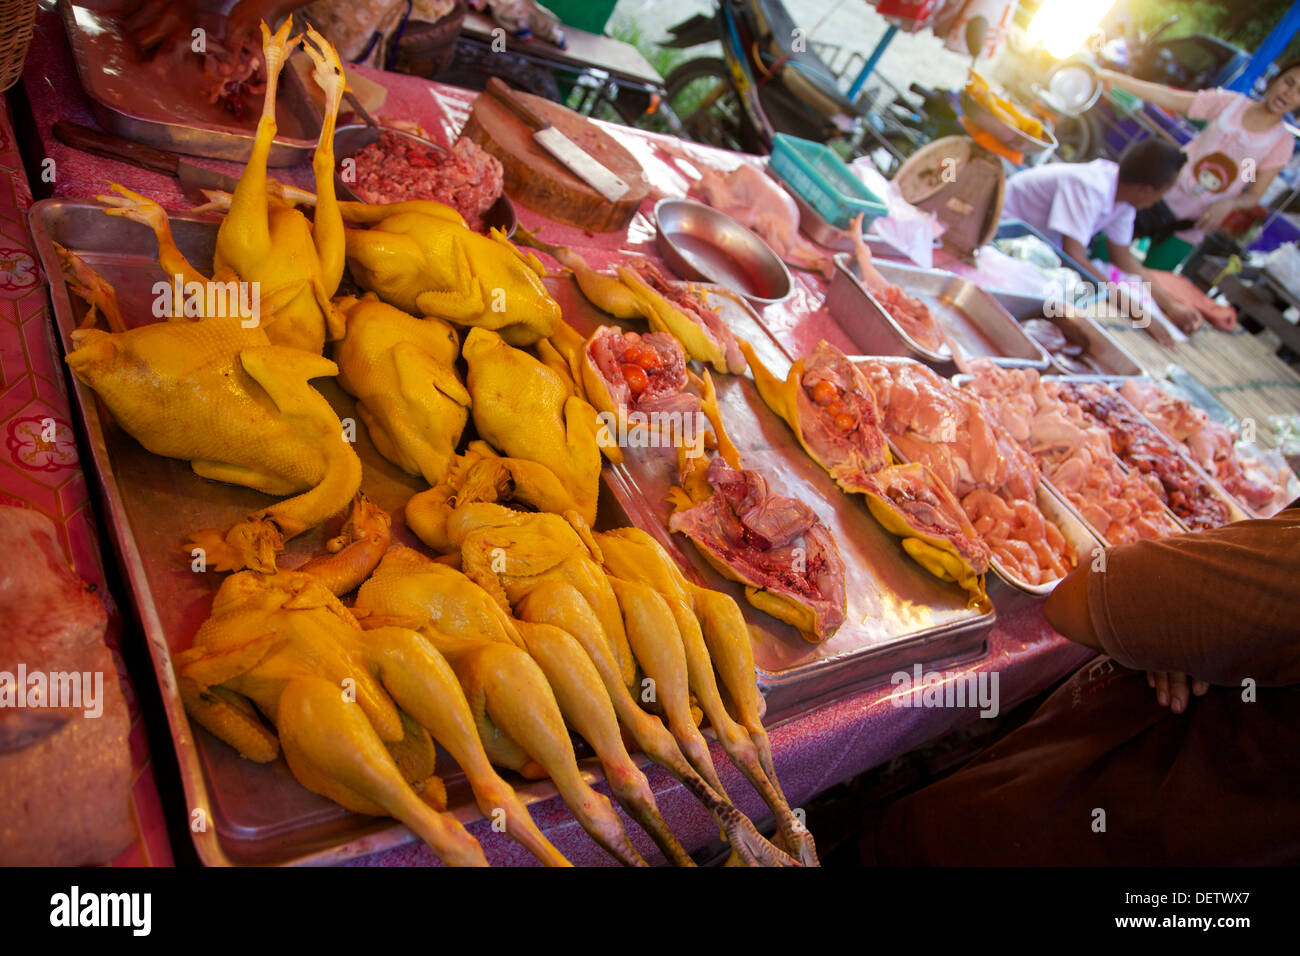 A Thai market stall, selling meat, Phuket, Thailand Stock Photo